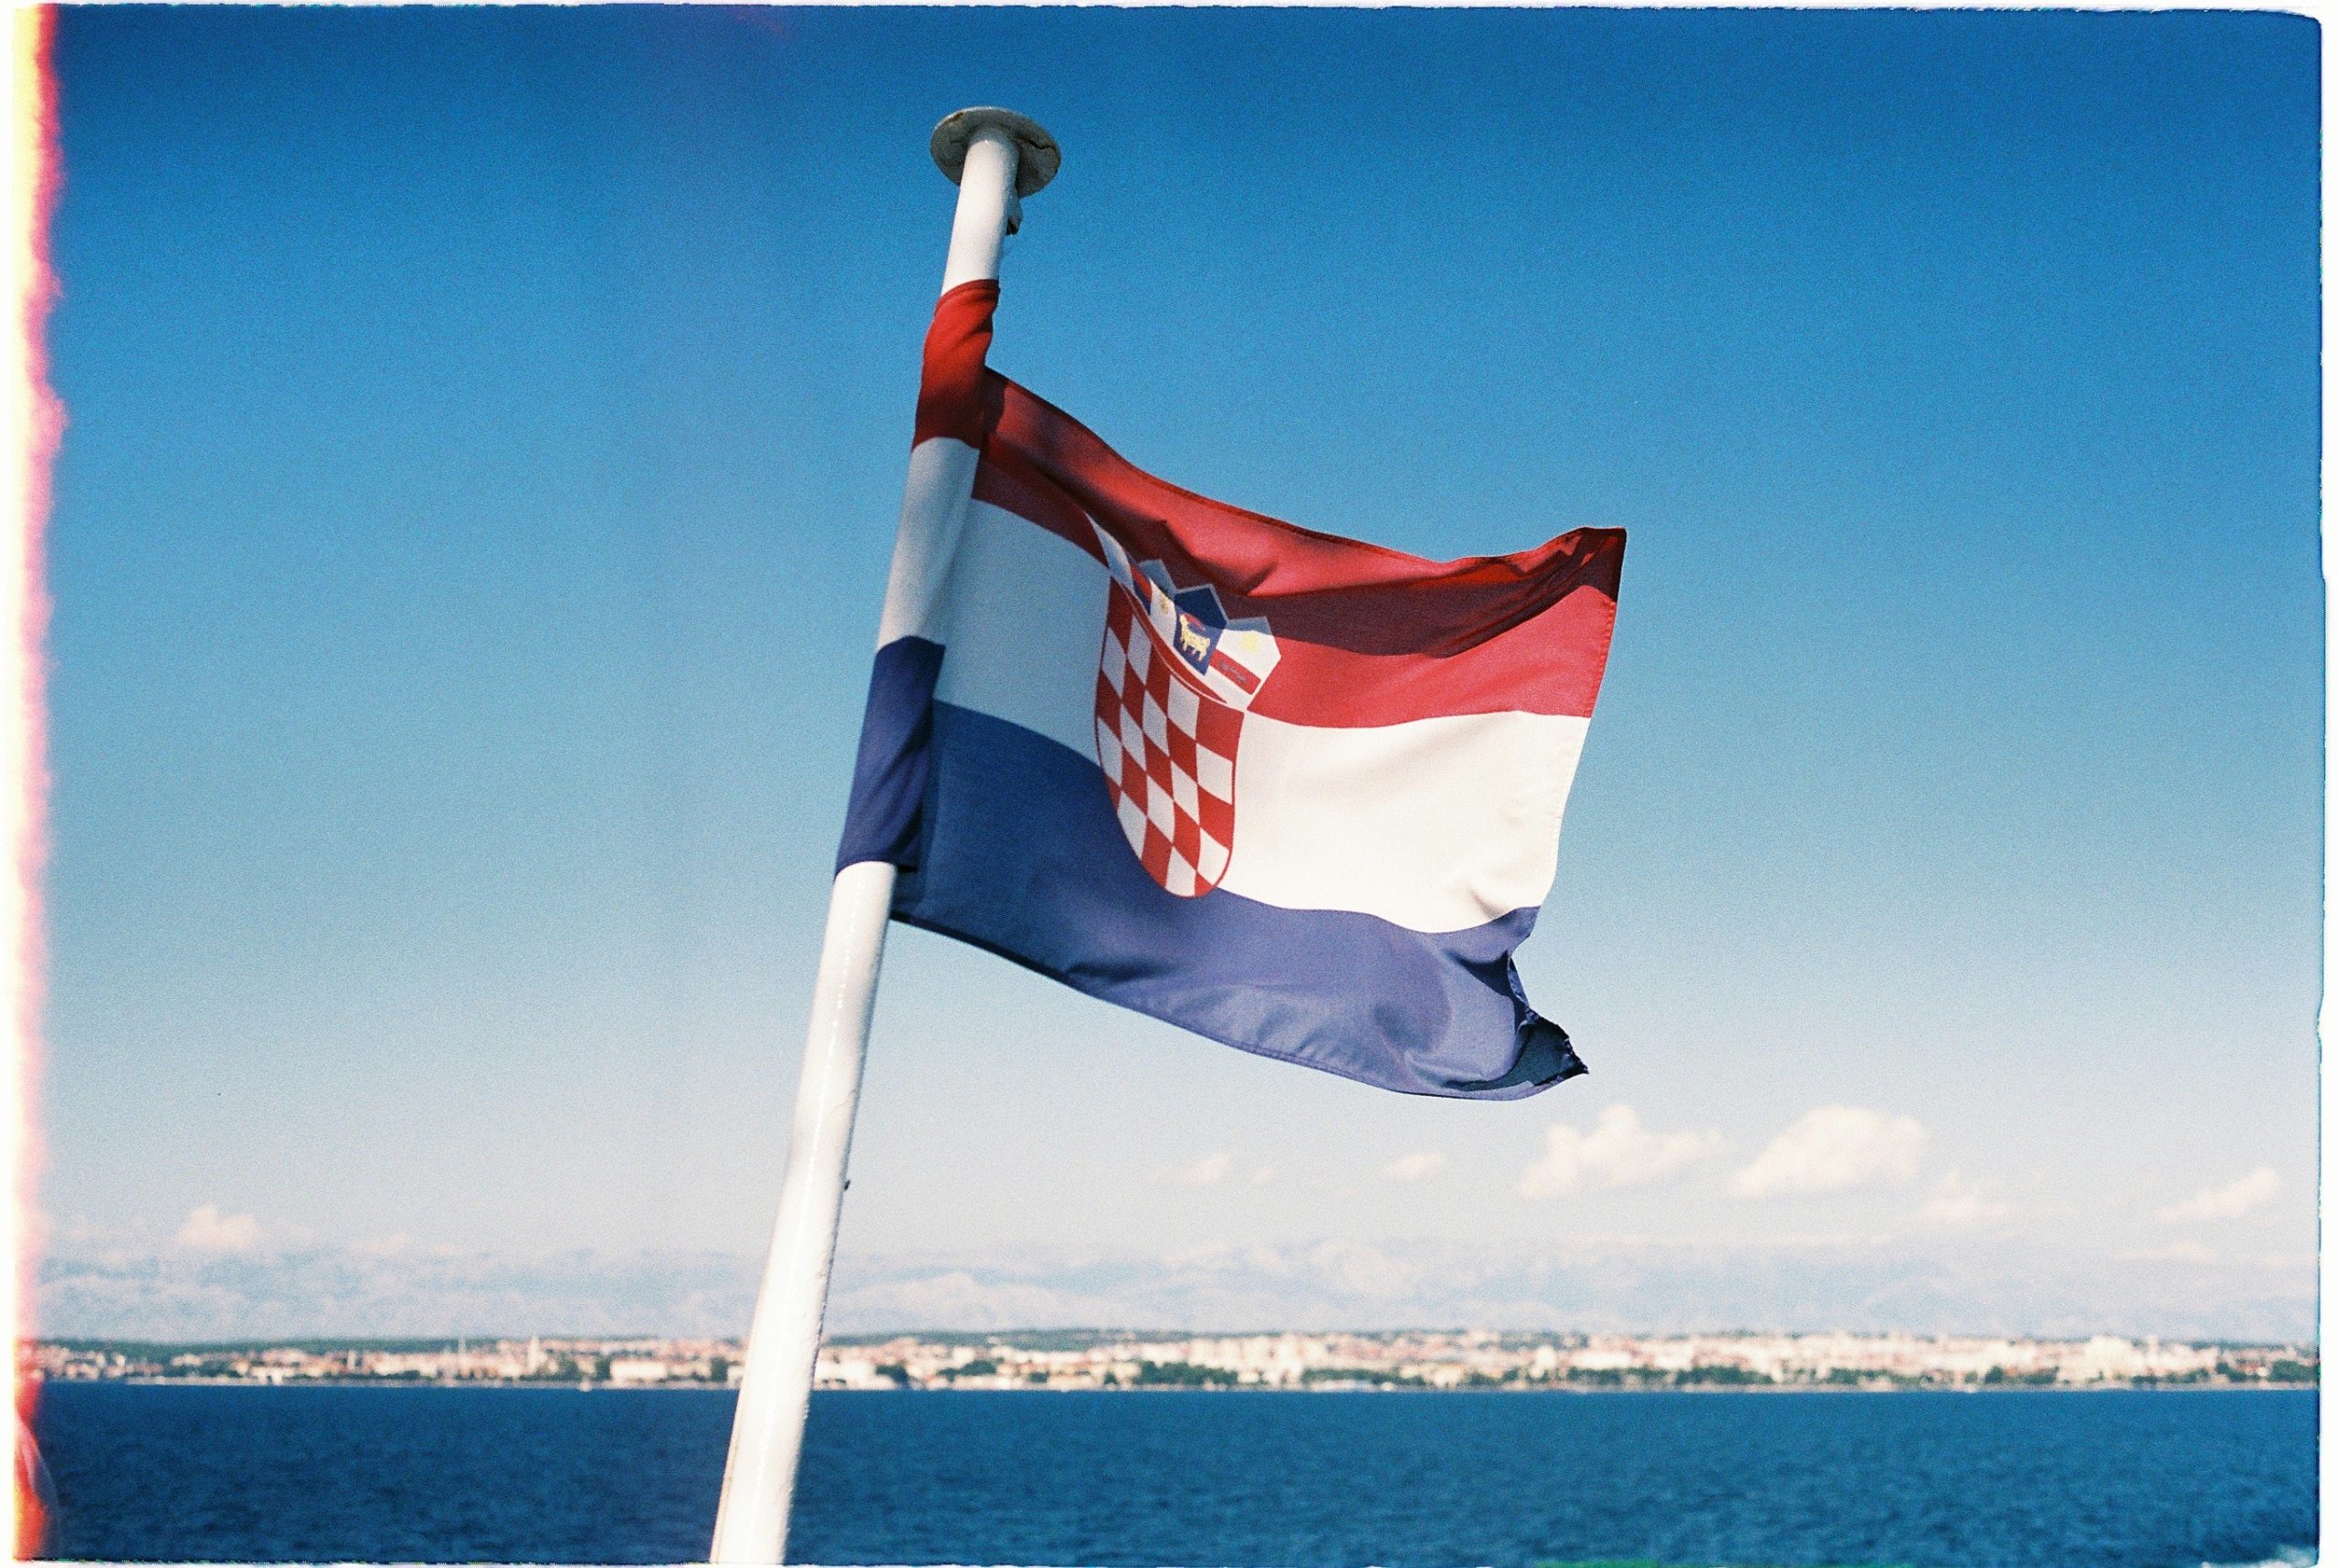 croatian enterprises